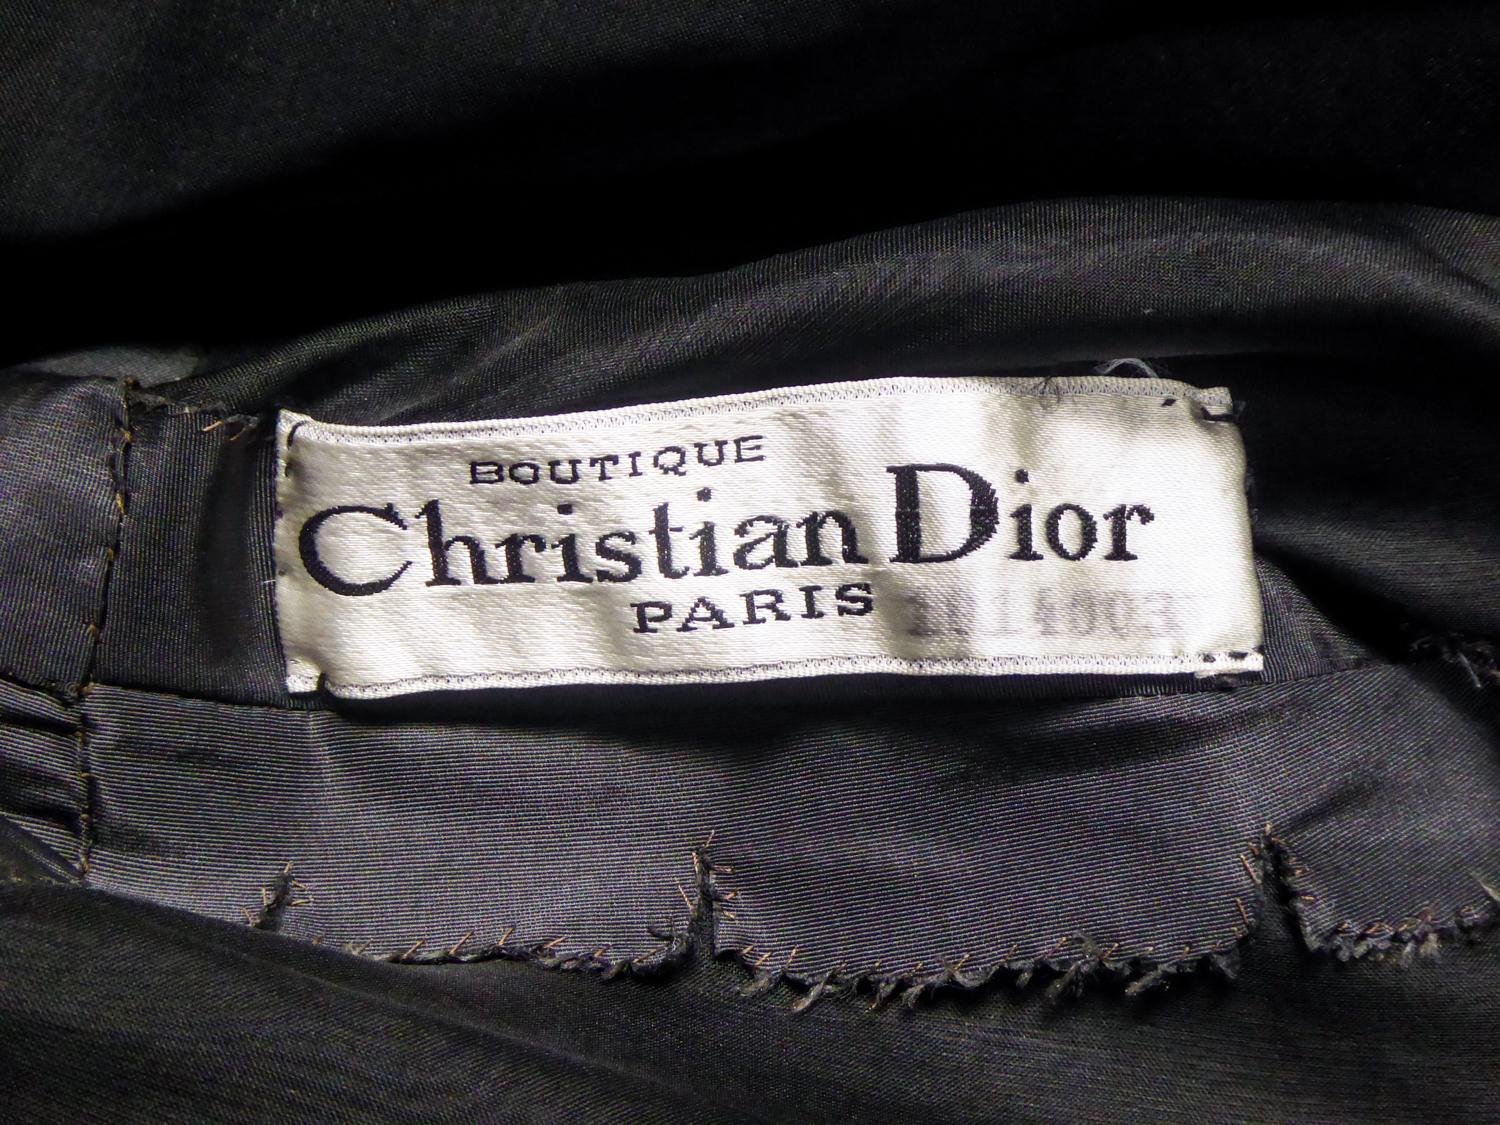 christian dior boutique label